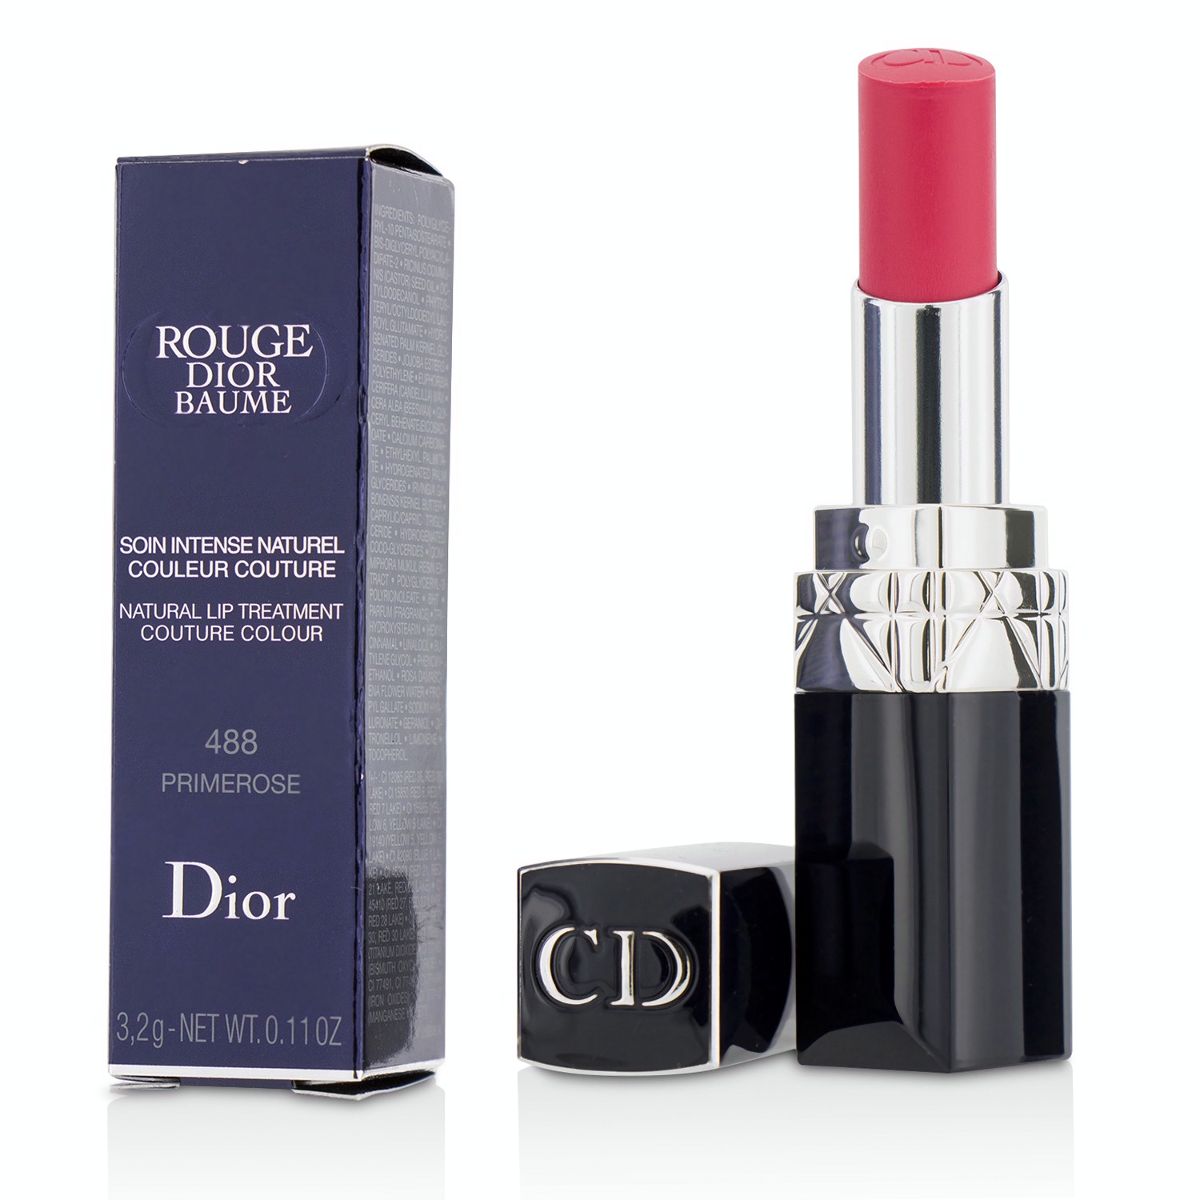 Rouge Dior Baume Natural Lip Treatment Couture Colour - # 488 Primerose Christian Dior Image